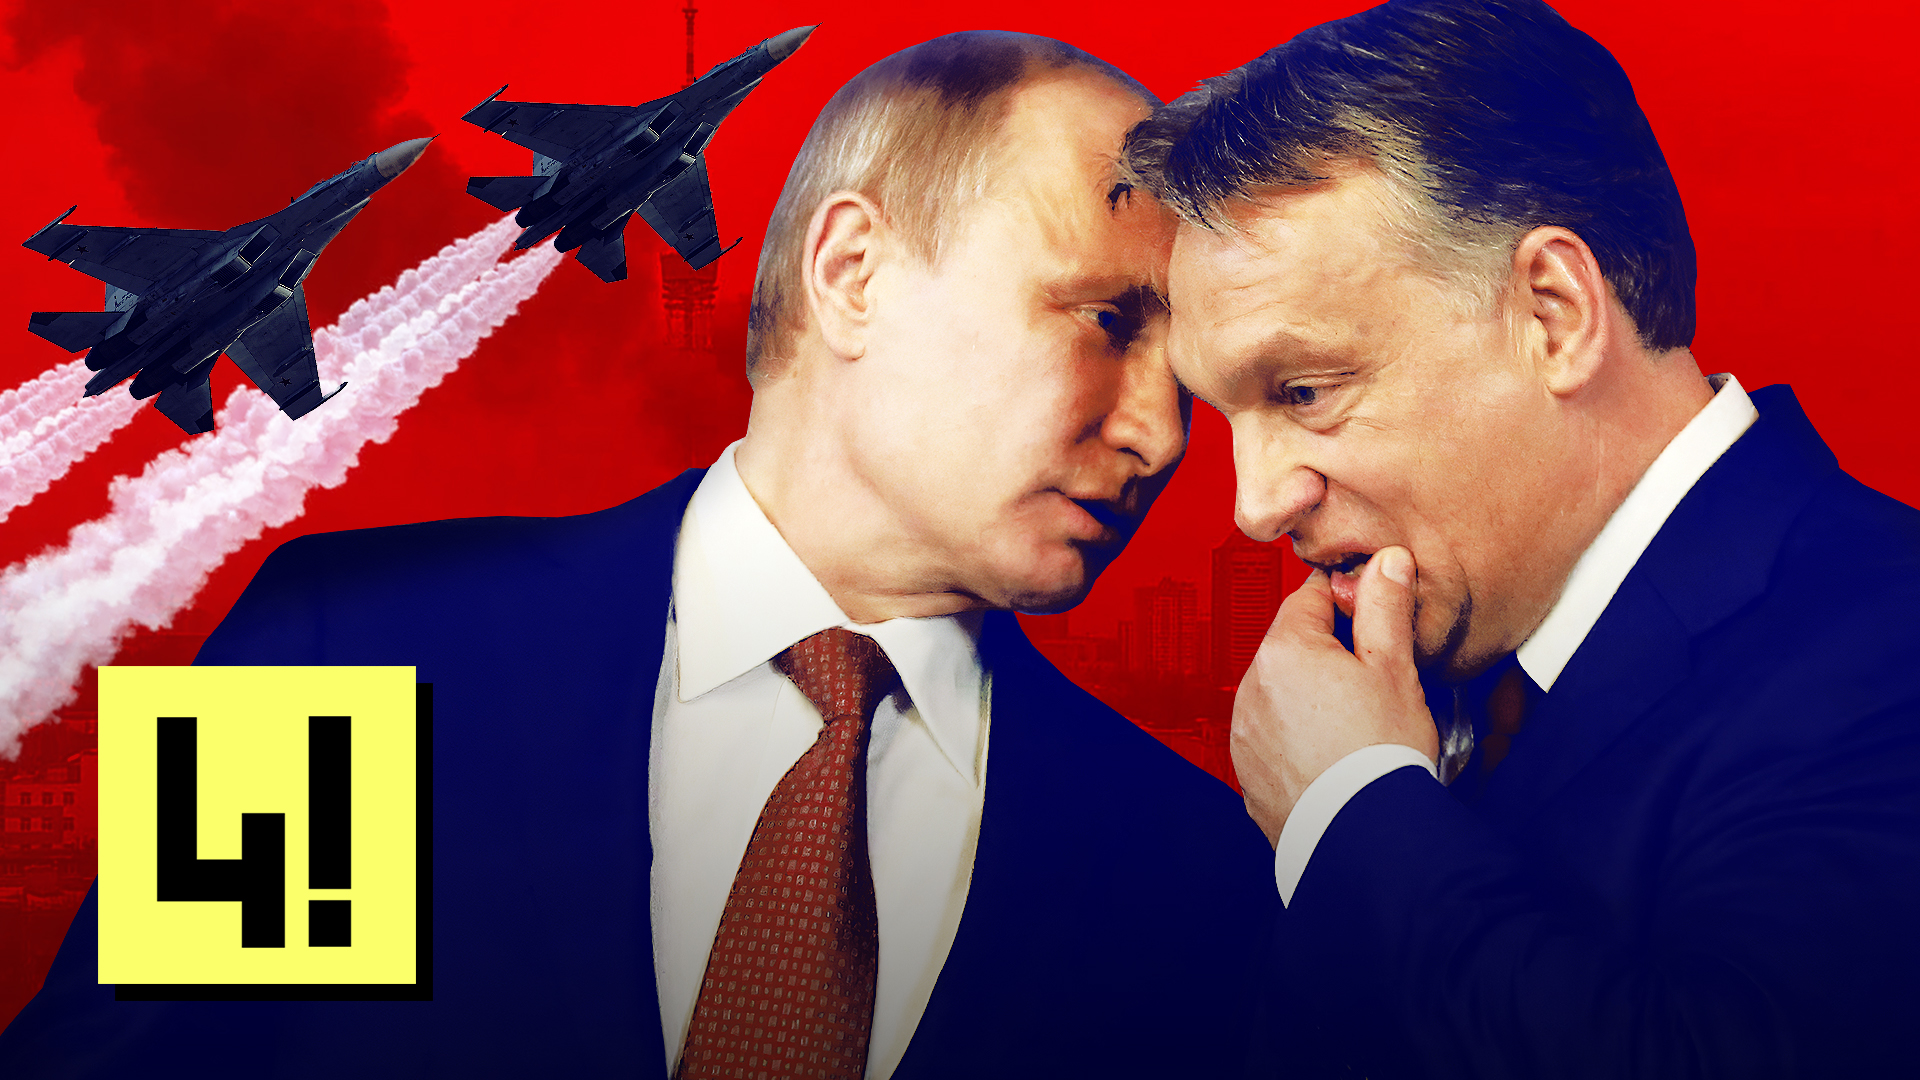 12 years of Putin-friendship cast a shadow over Orbán